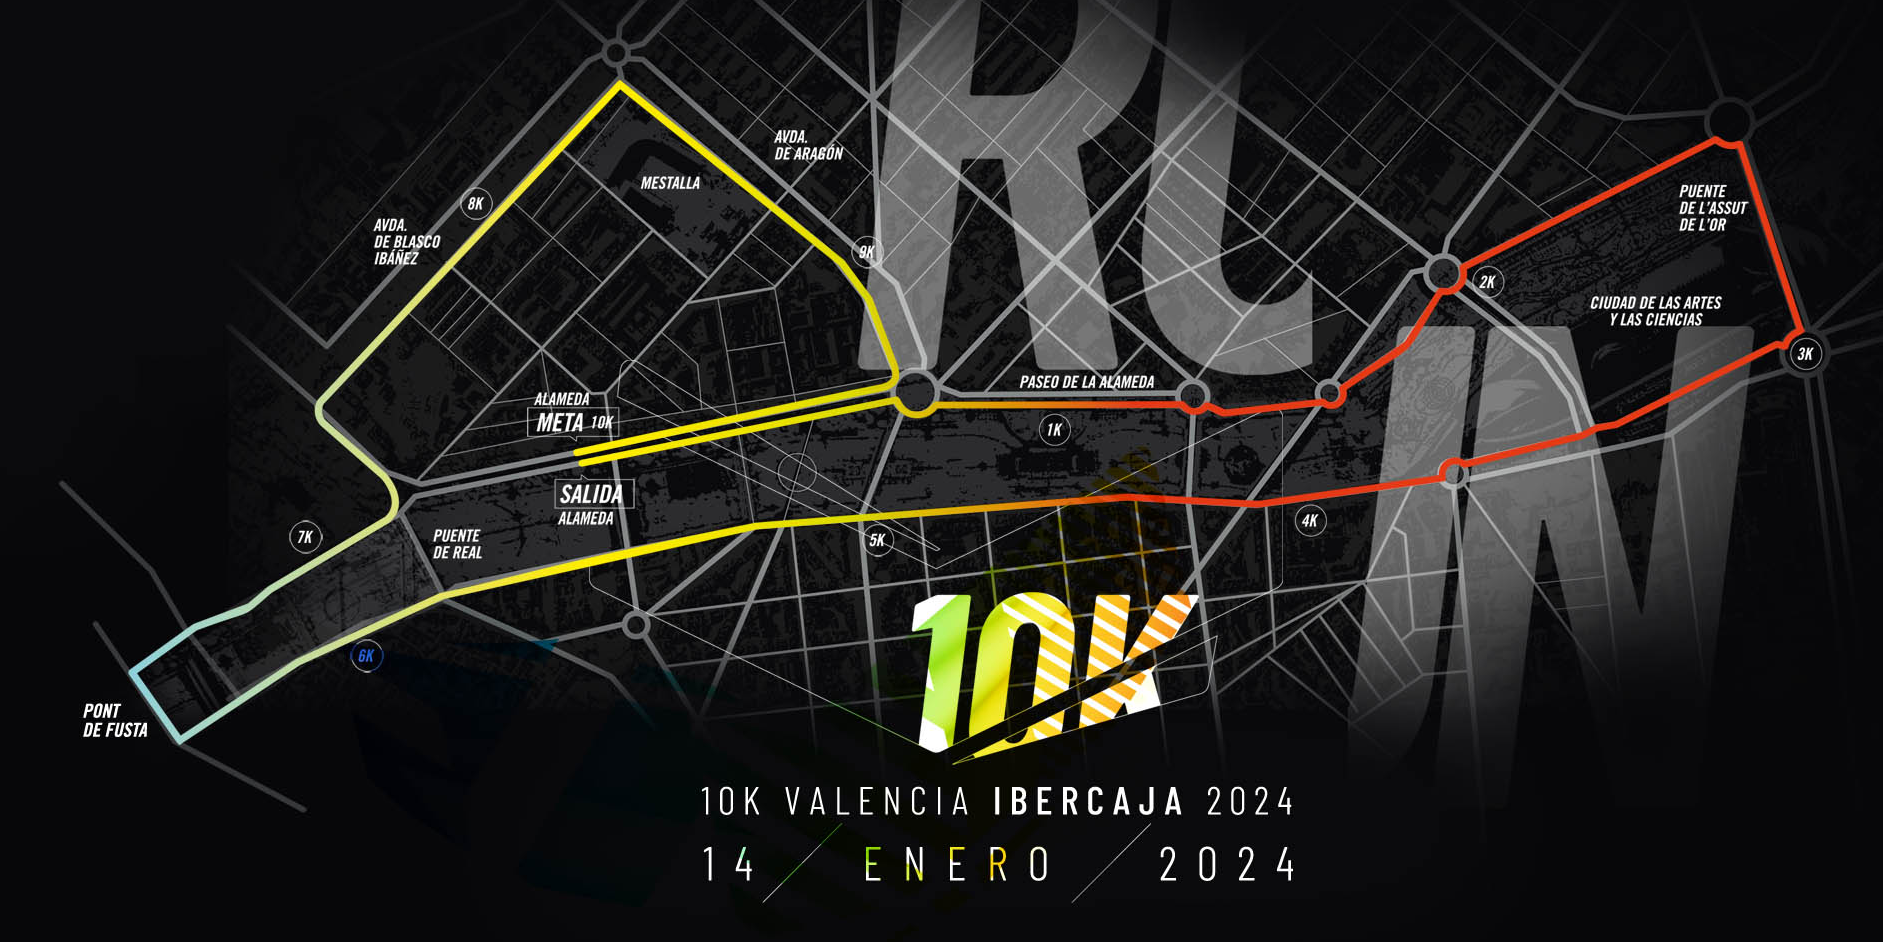 10K Valencia Ibercaja 2024 Live, Schedule & TV Details Info